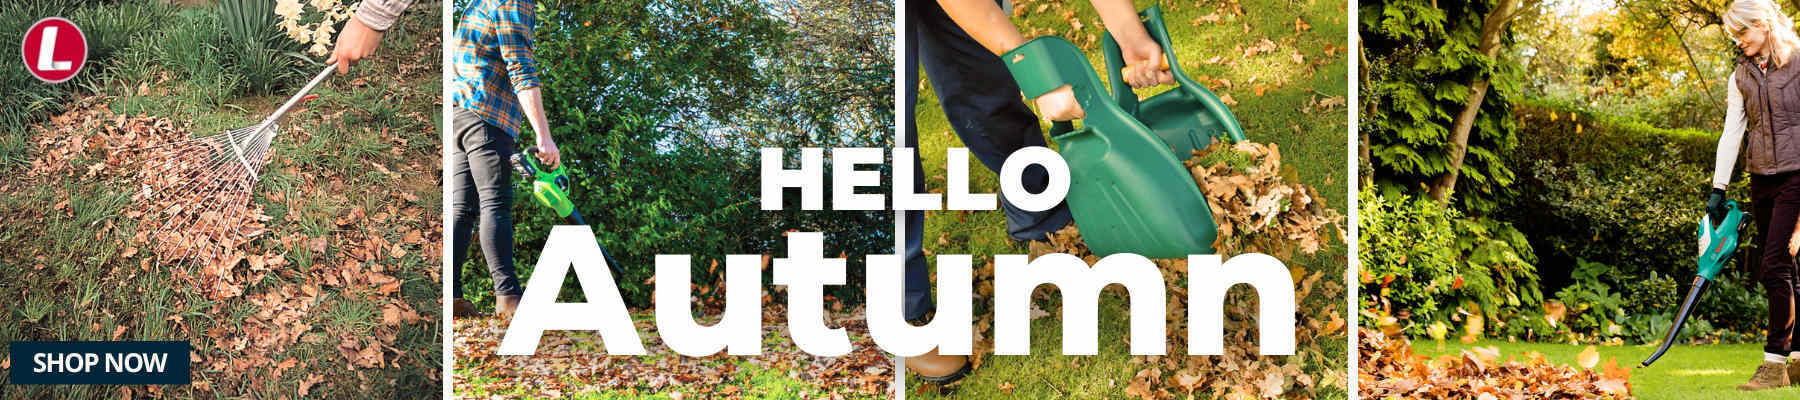 Hello Autumn - Garden Tidy Tools at Lenehans.ie